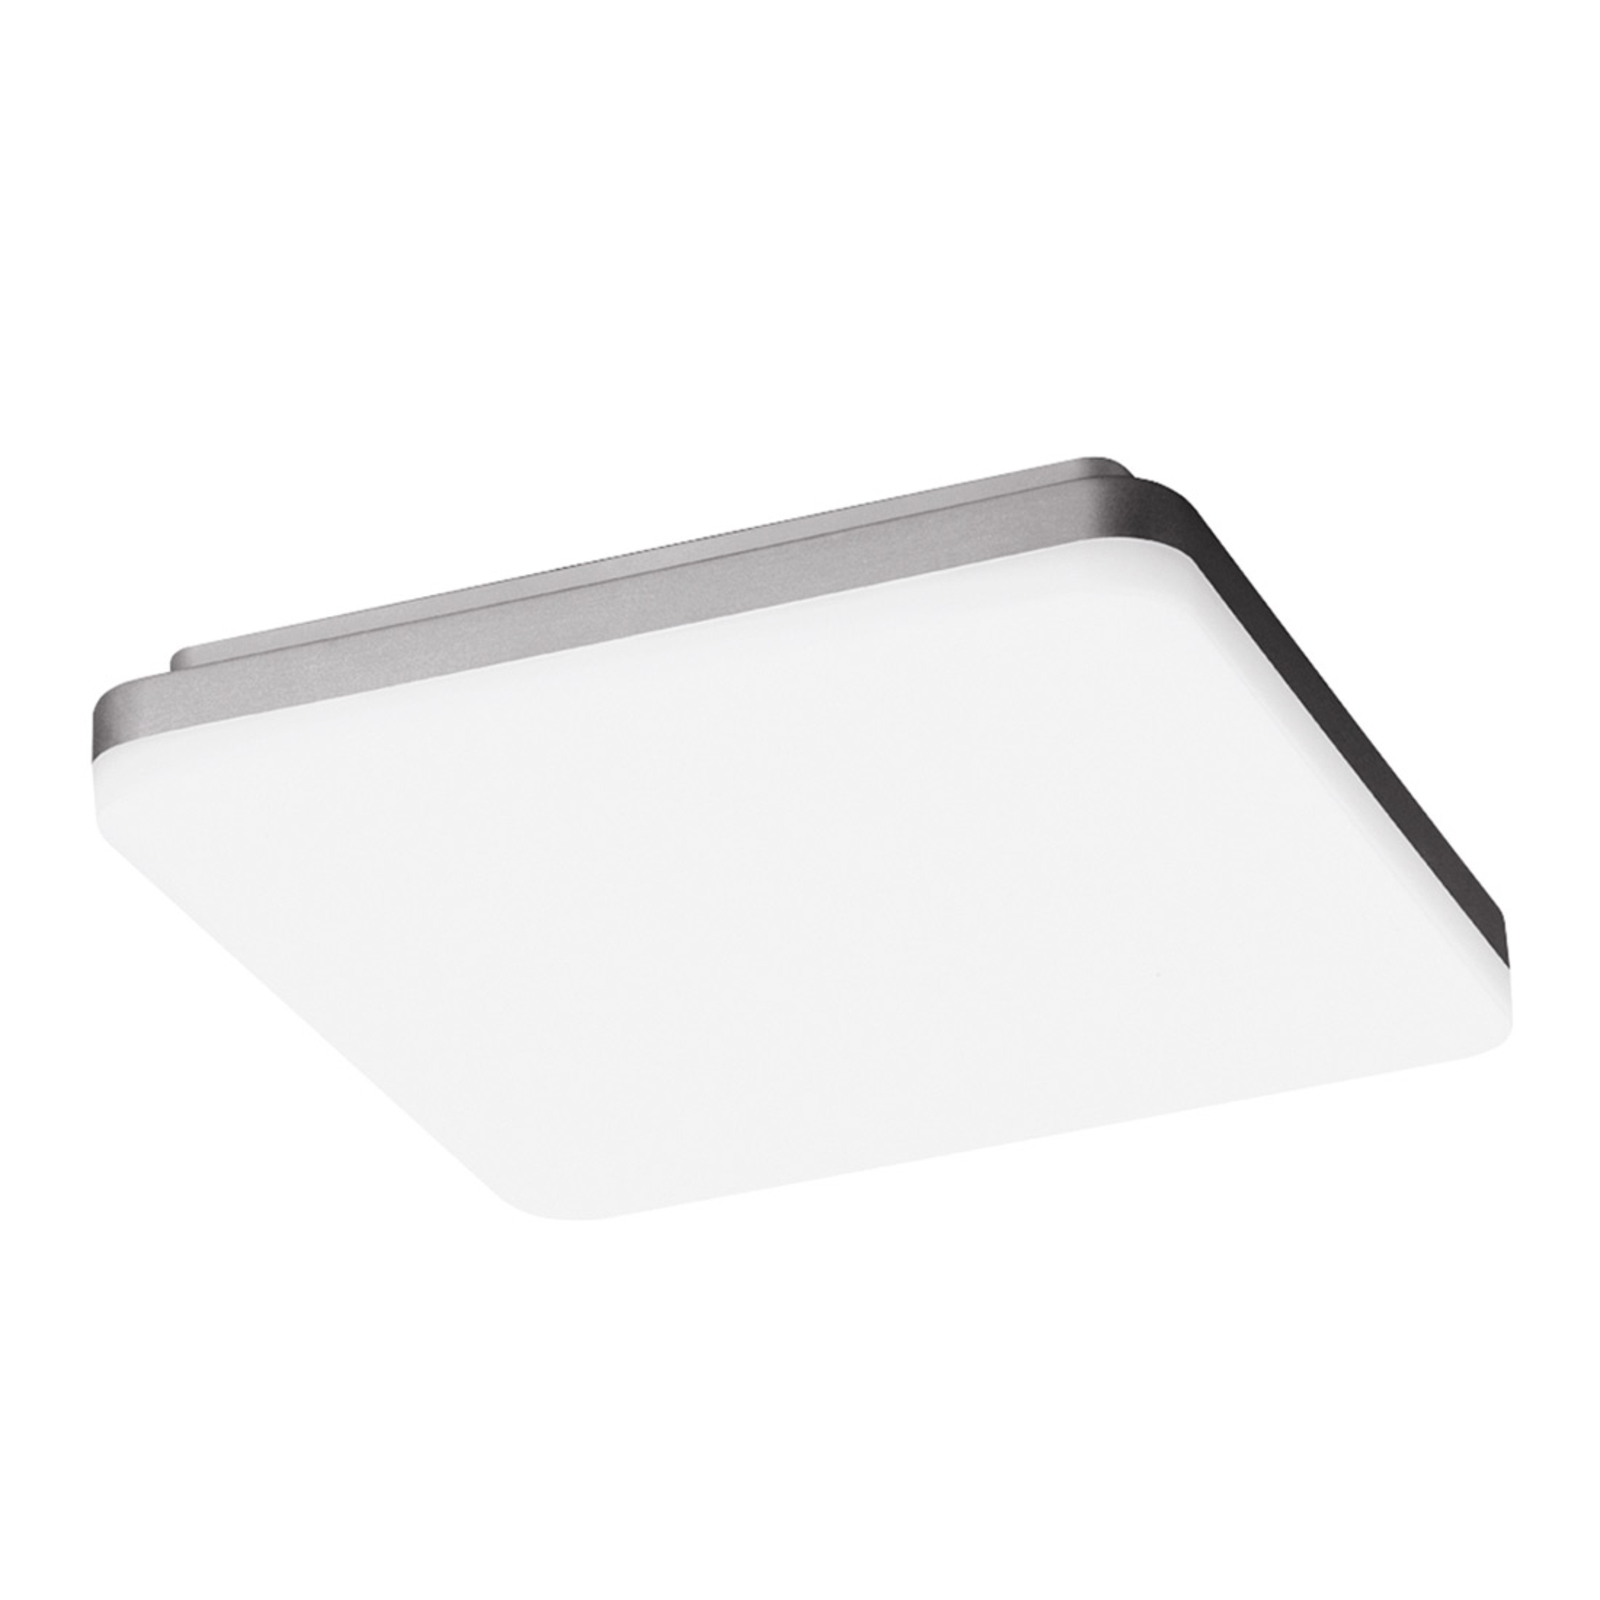 WL260 LED ceiling lamp angular aluminium 24 W